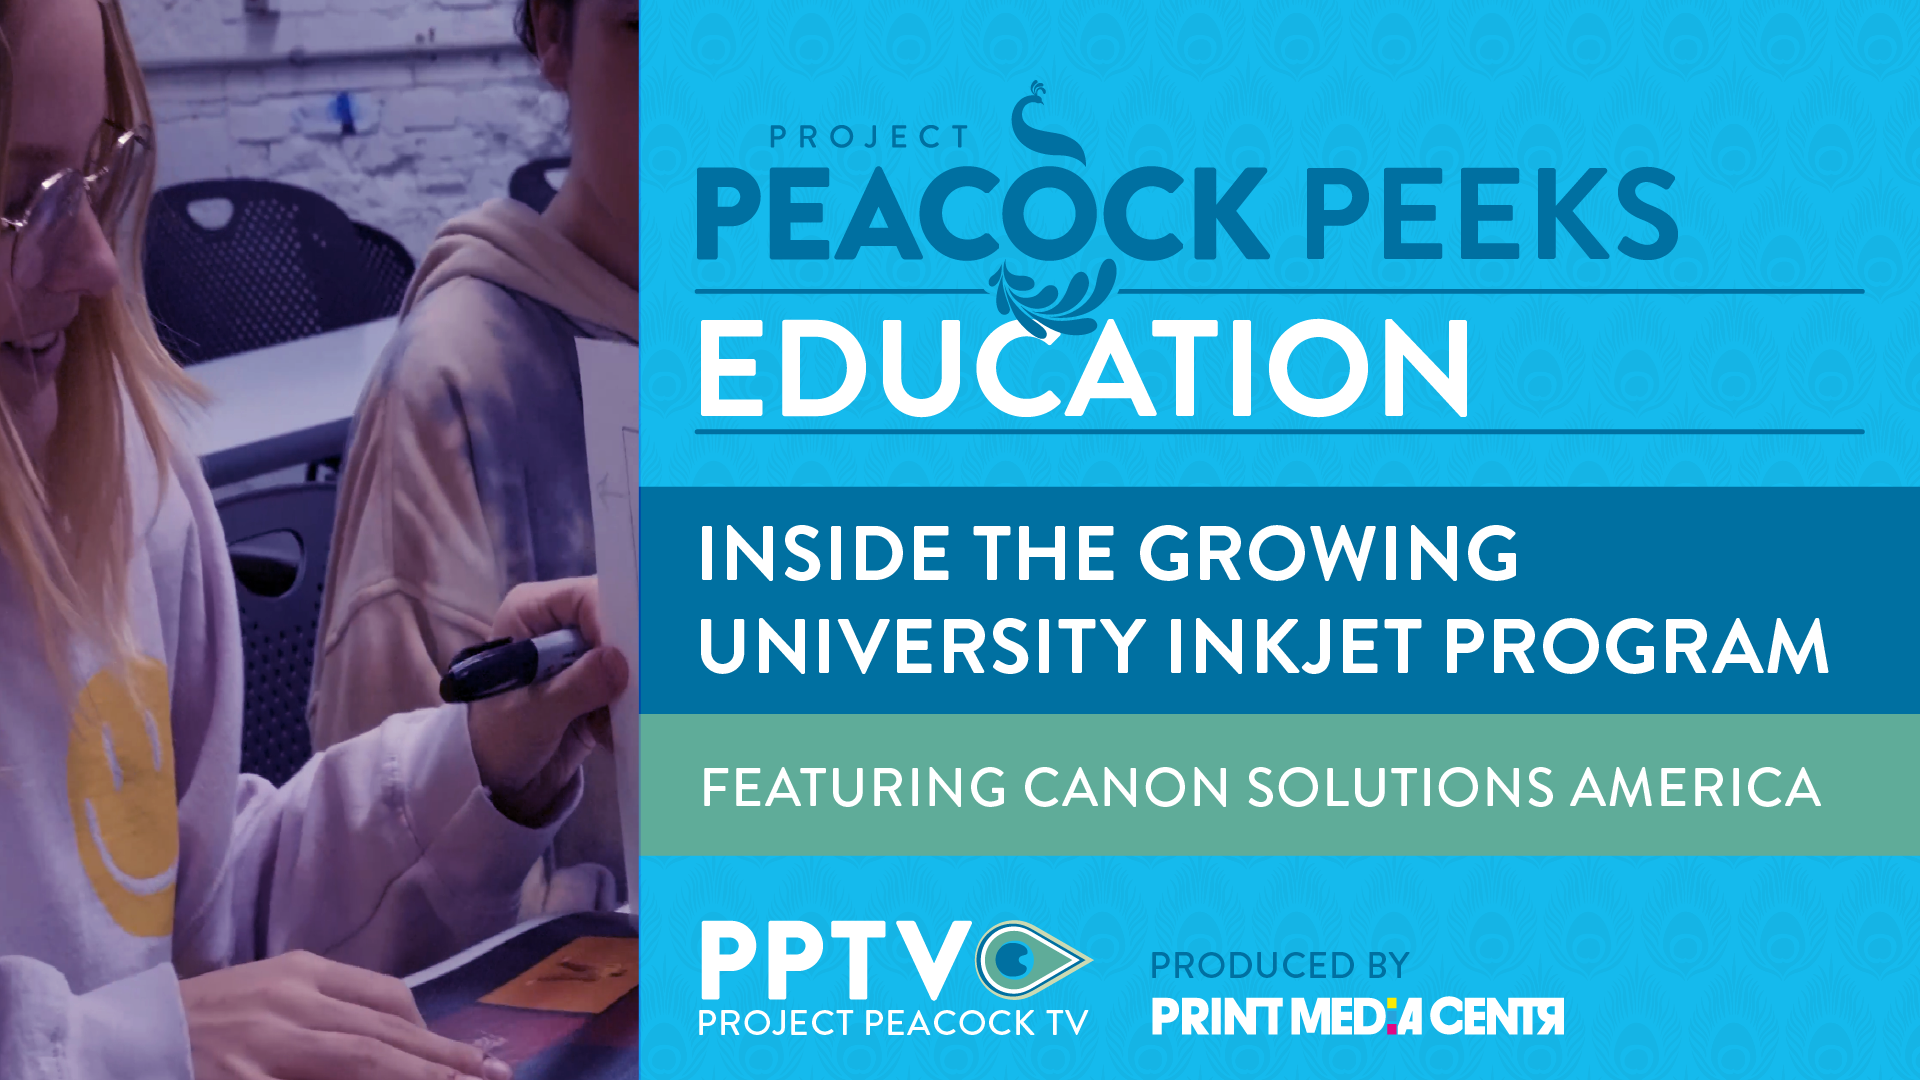 Inside the Growing University Inkjet Program from Canon Solutions America